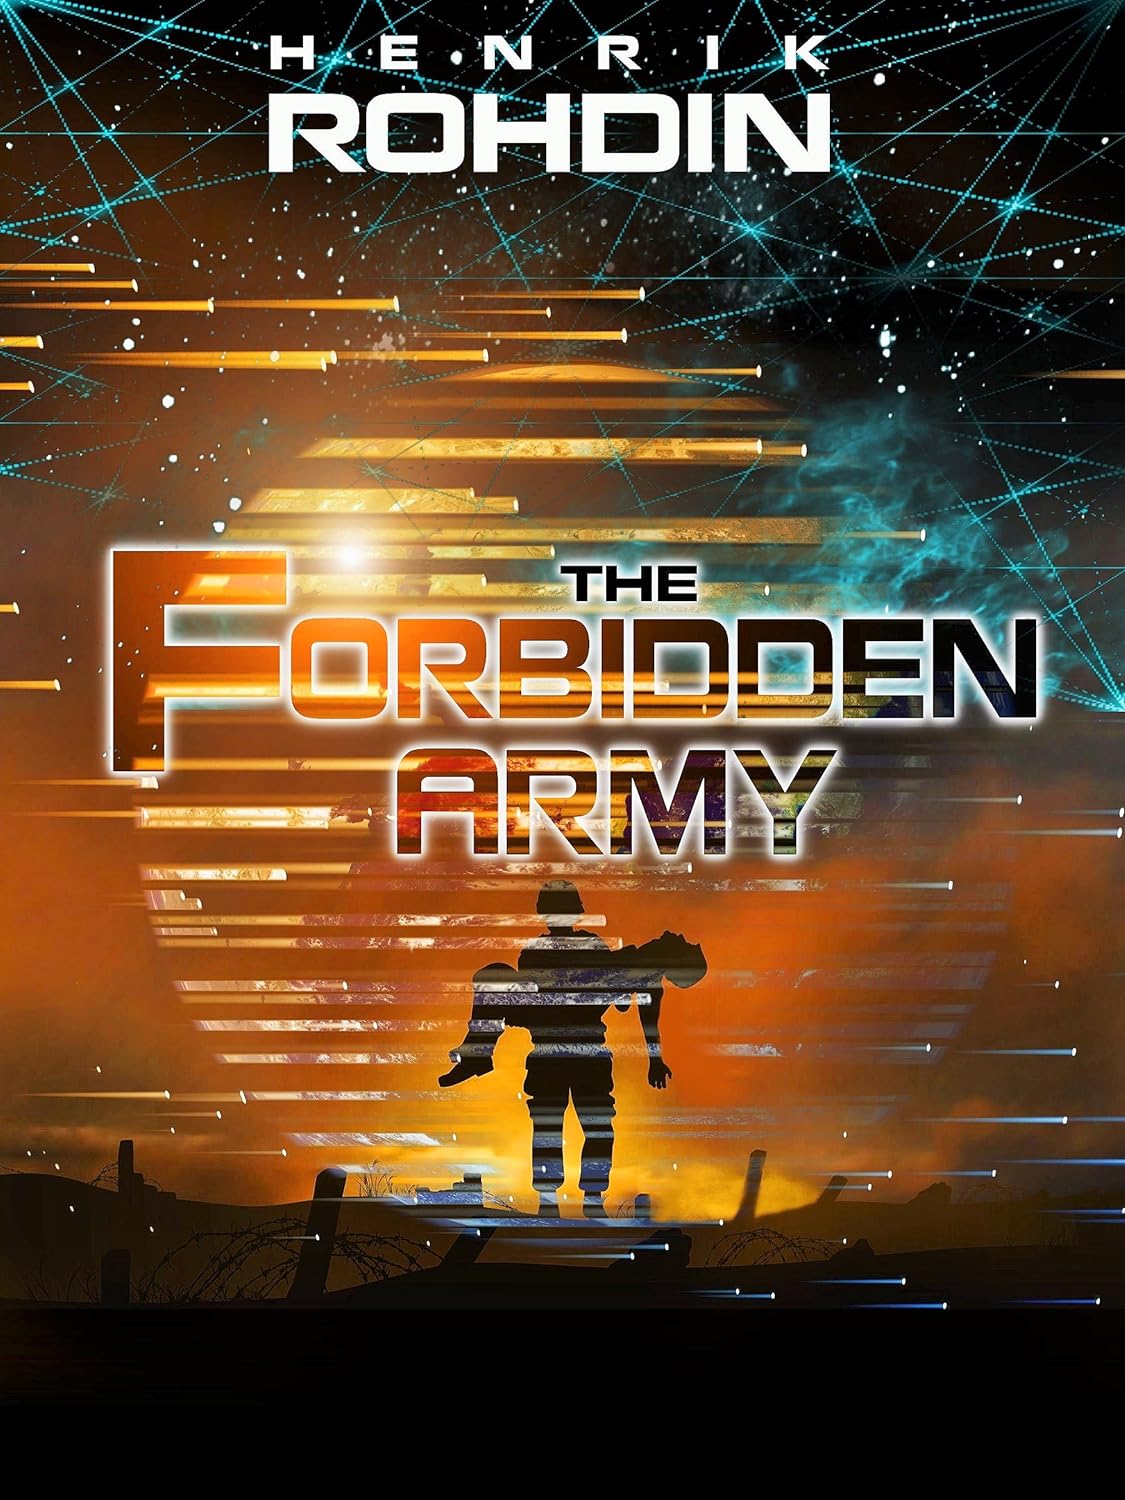 The Forbidden Army